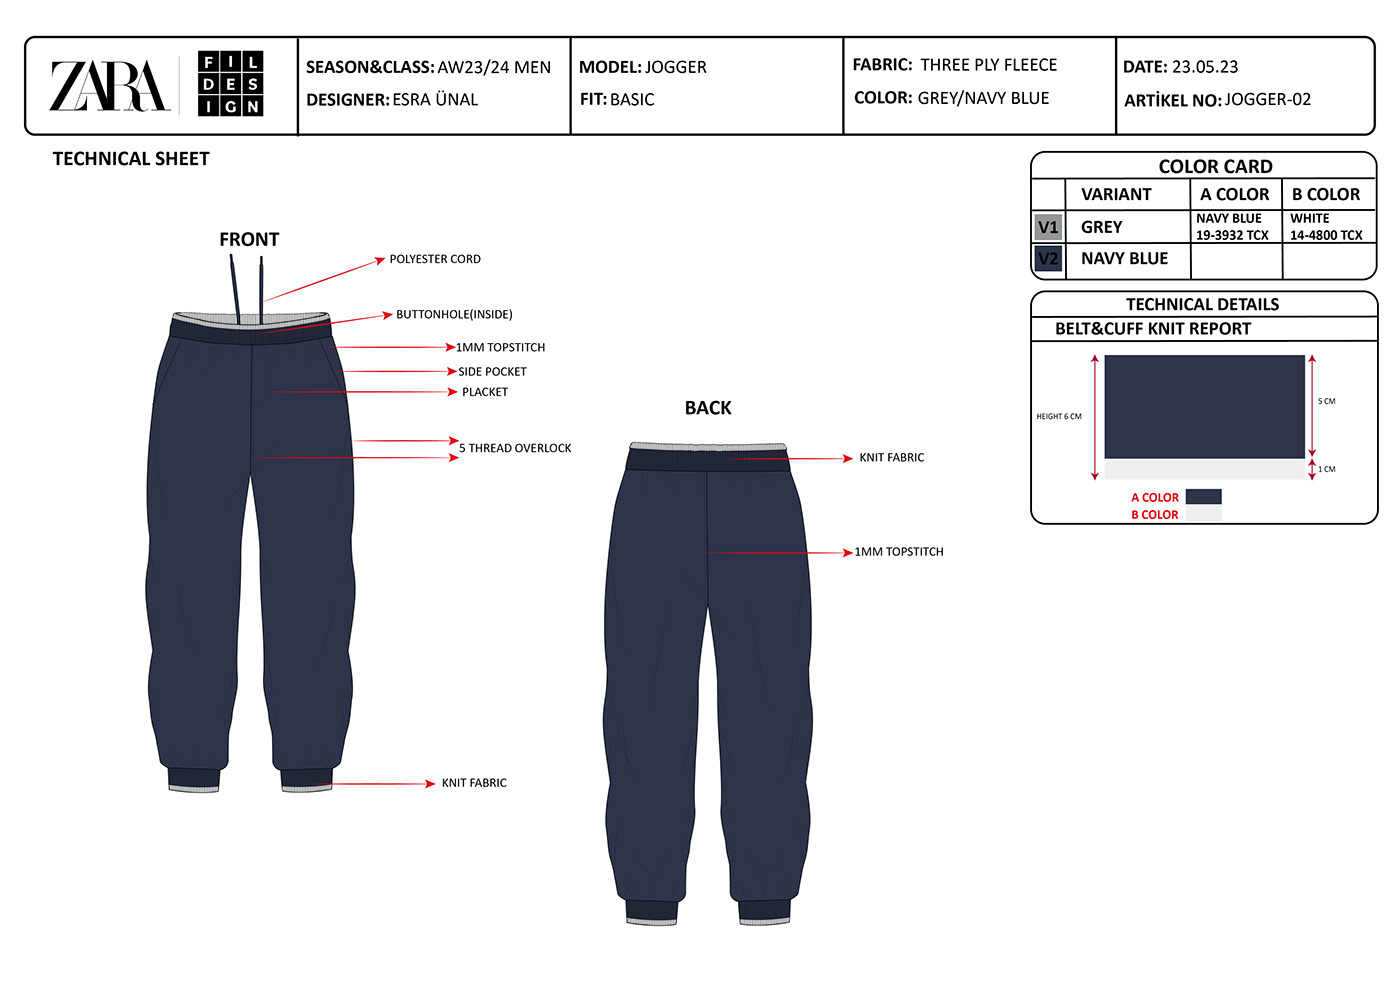 Menswear Menswear Design jogger design fashion design technical drawing Technical Sheet capsule collection MENS DESIGN sweatshirt design zara men